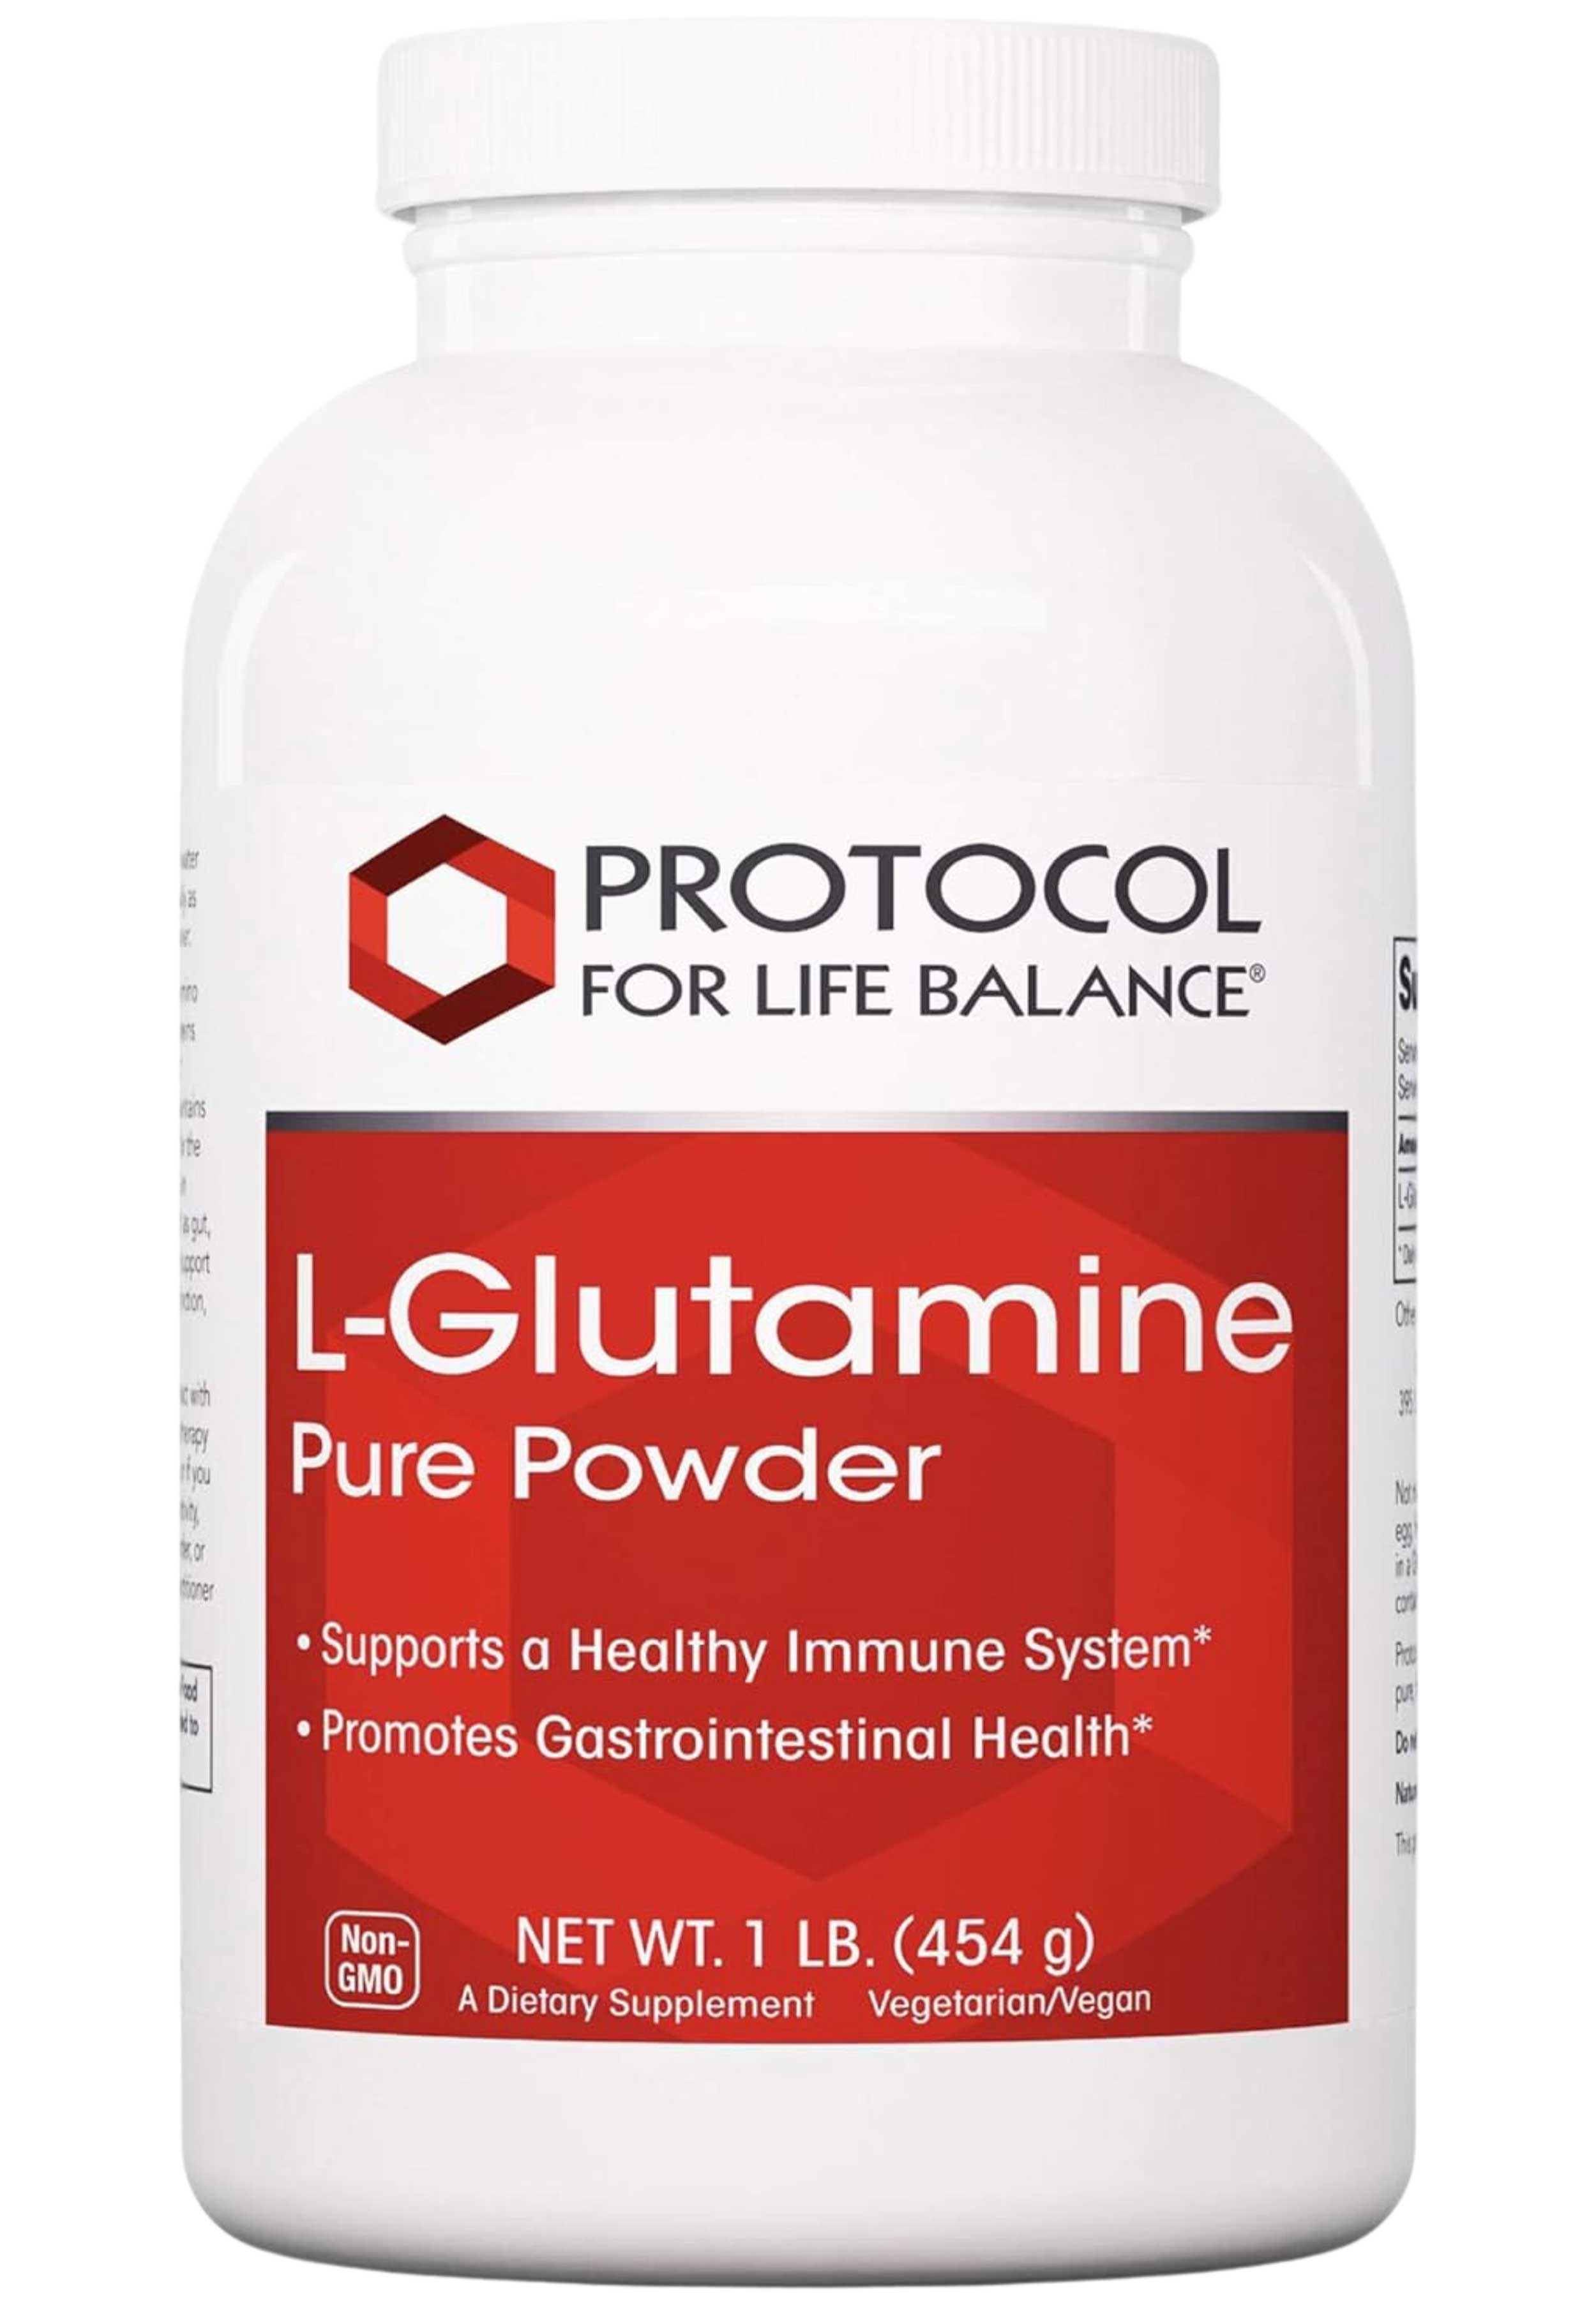 Protocol for Life Balance L-Glutamine Pure Powder